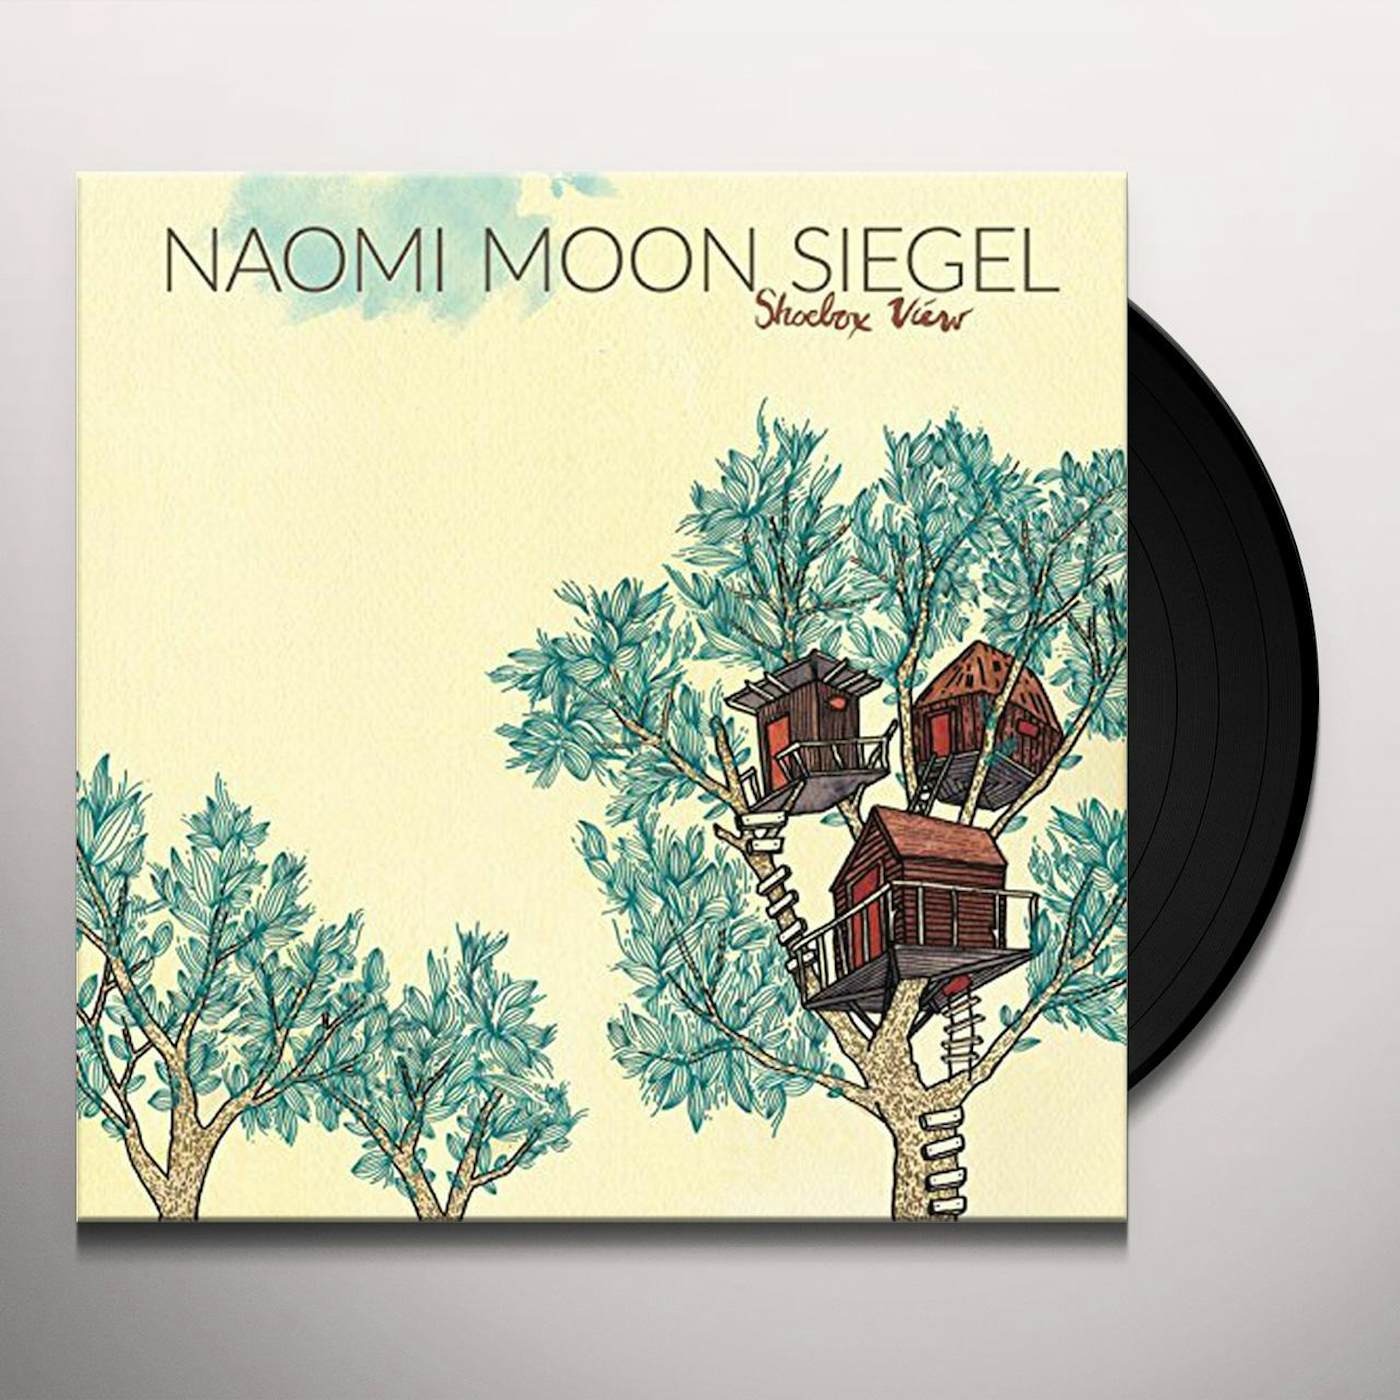 Naomi Moon Siegel Shoebox View Vinyl Record